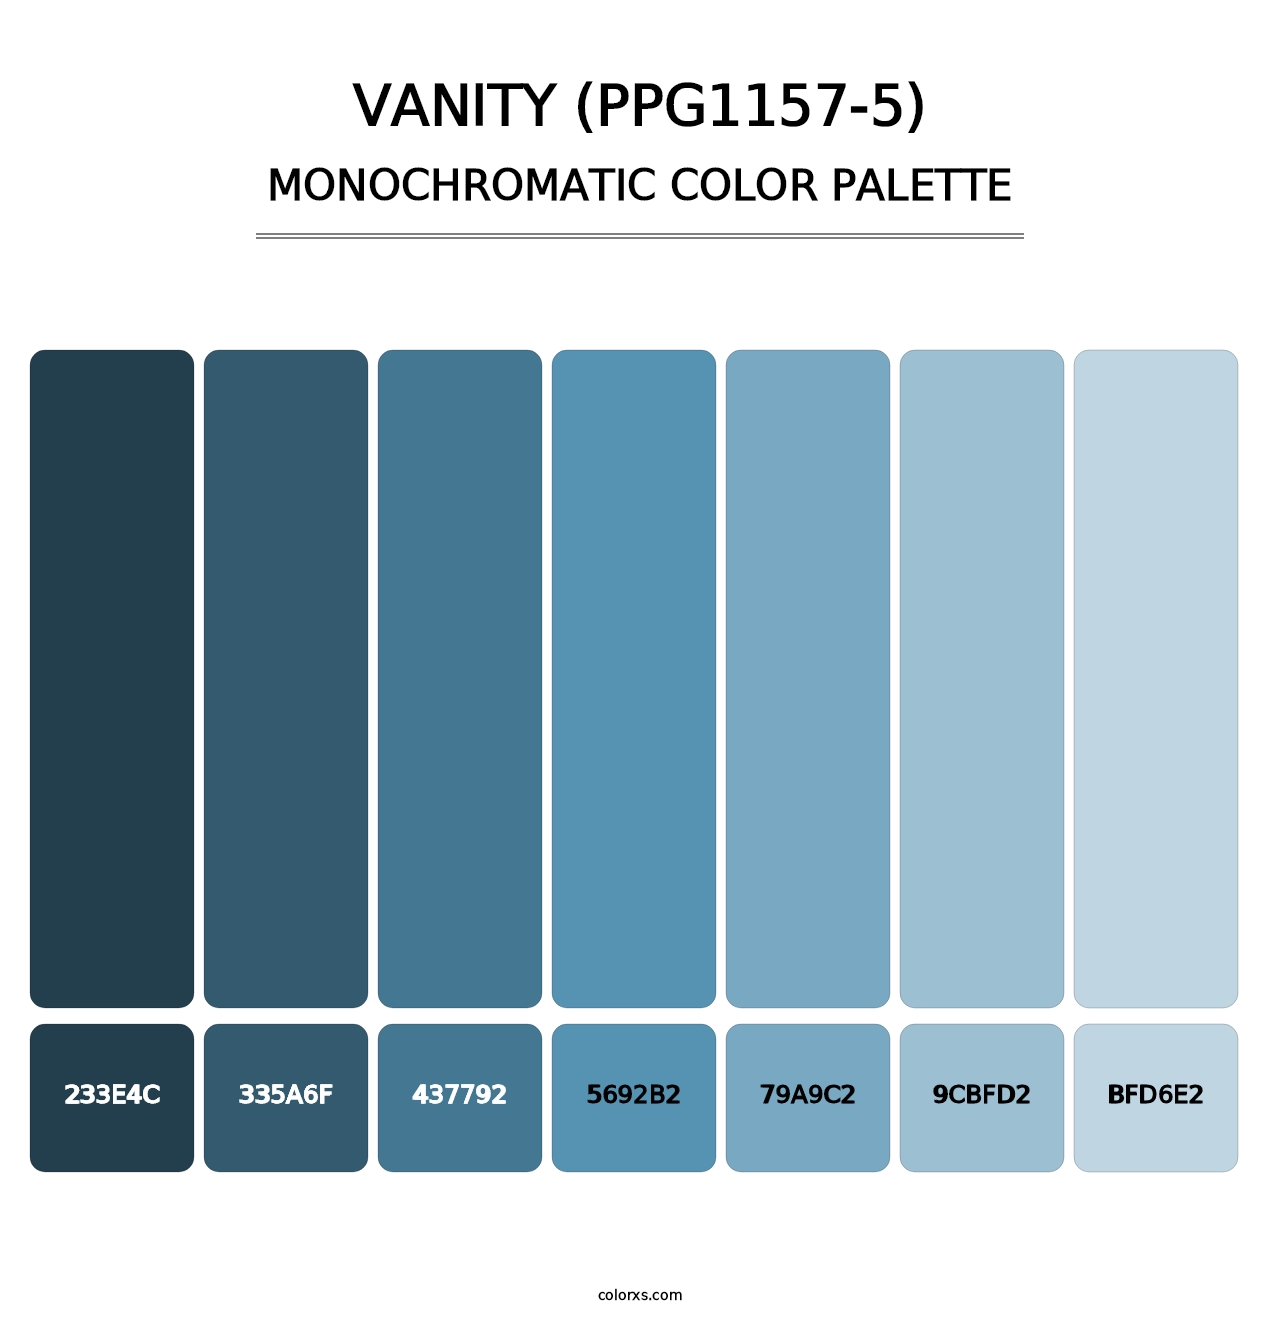 Vanity (PPG1157-5) - Monochromatic Color Palette